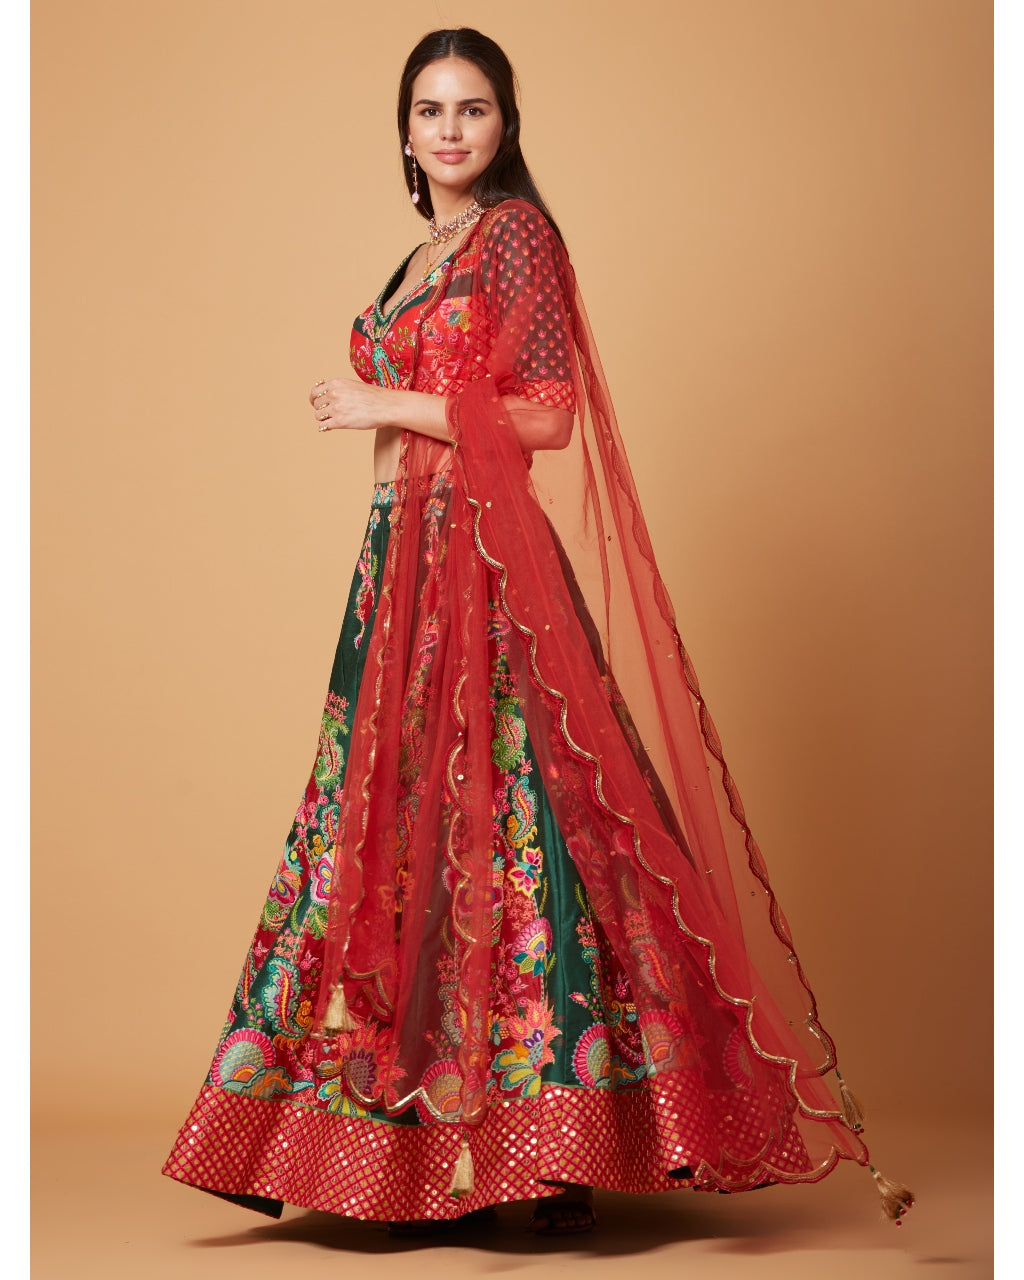 Ujjwal Creation Bridal Wedding Wear Orange & Parrot Green Art Silk Lehenga  Choli and Dupatta at Rs 2399/piece in Surat